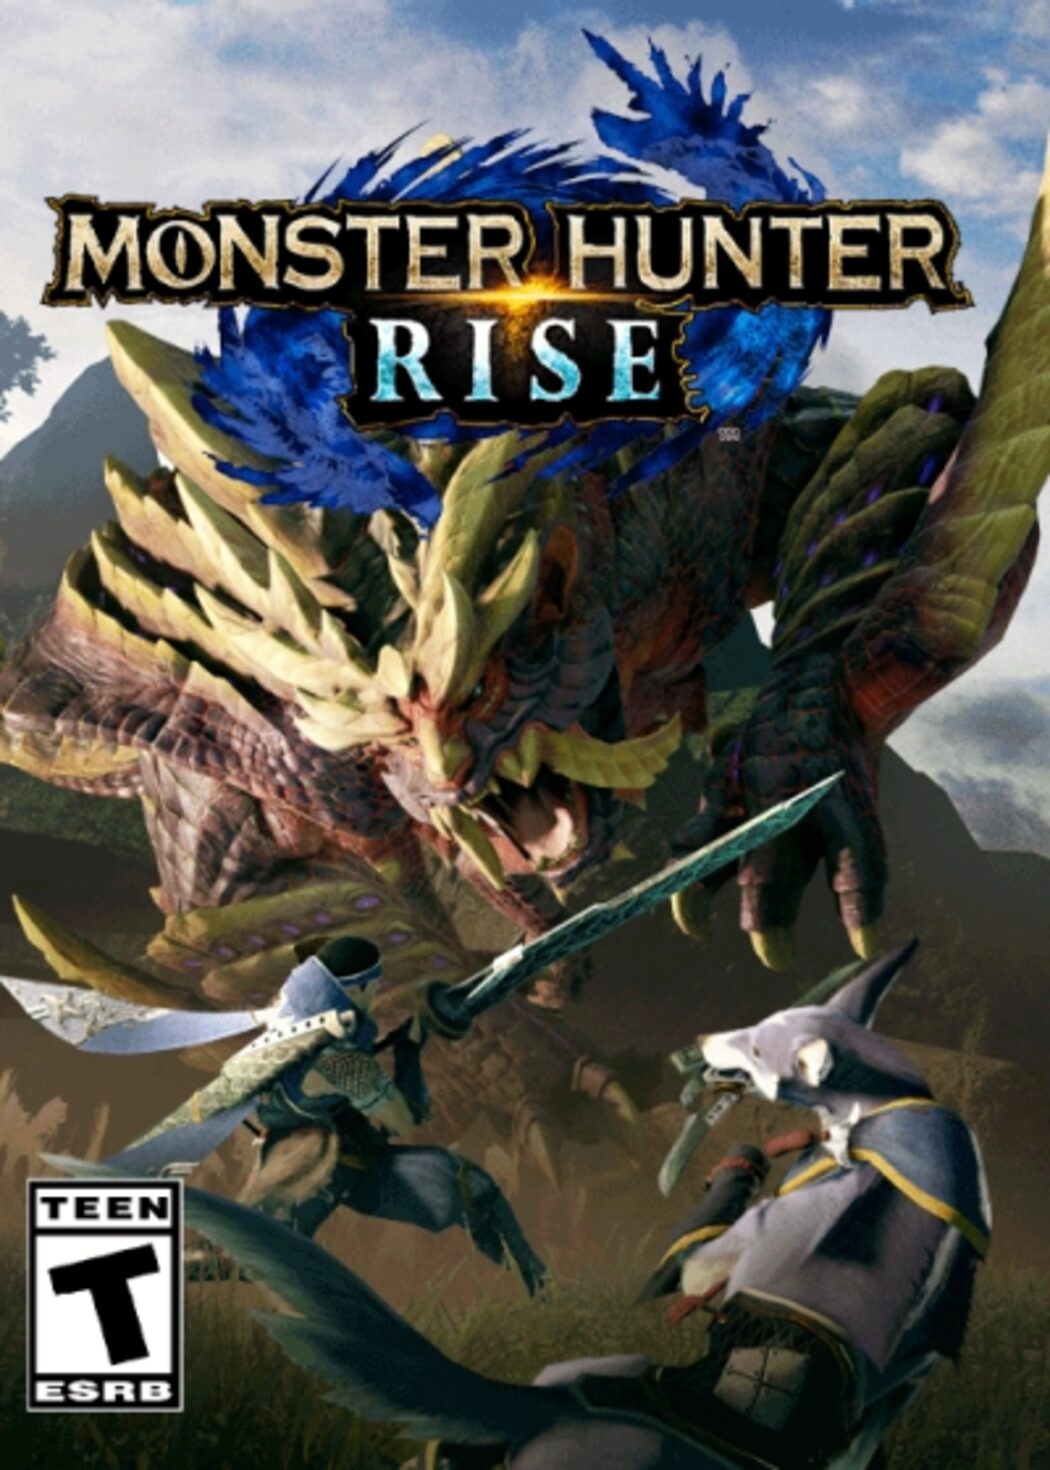 Compra Monster Hunter Rise (PC) Steam Key mais barato